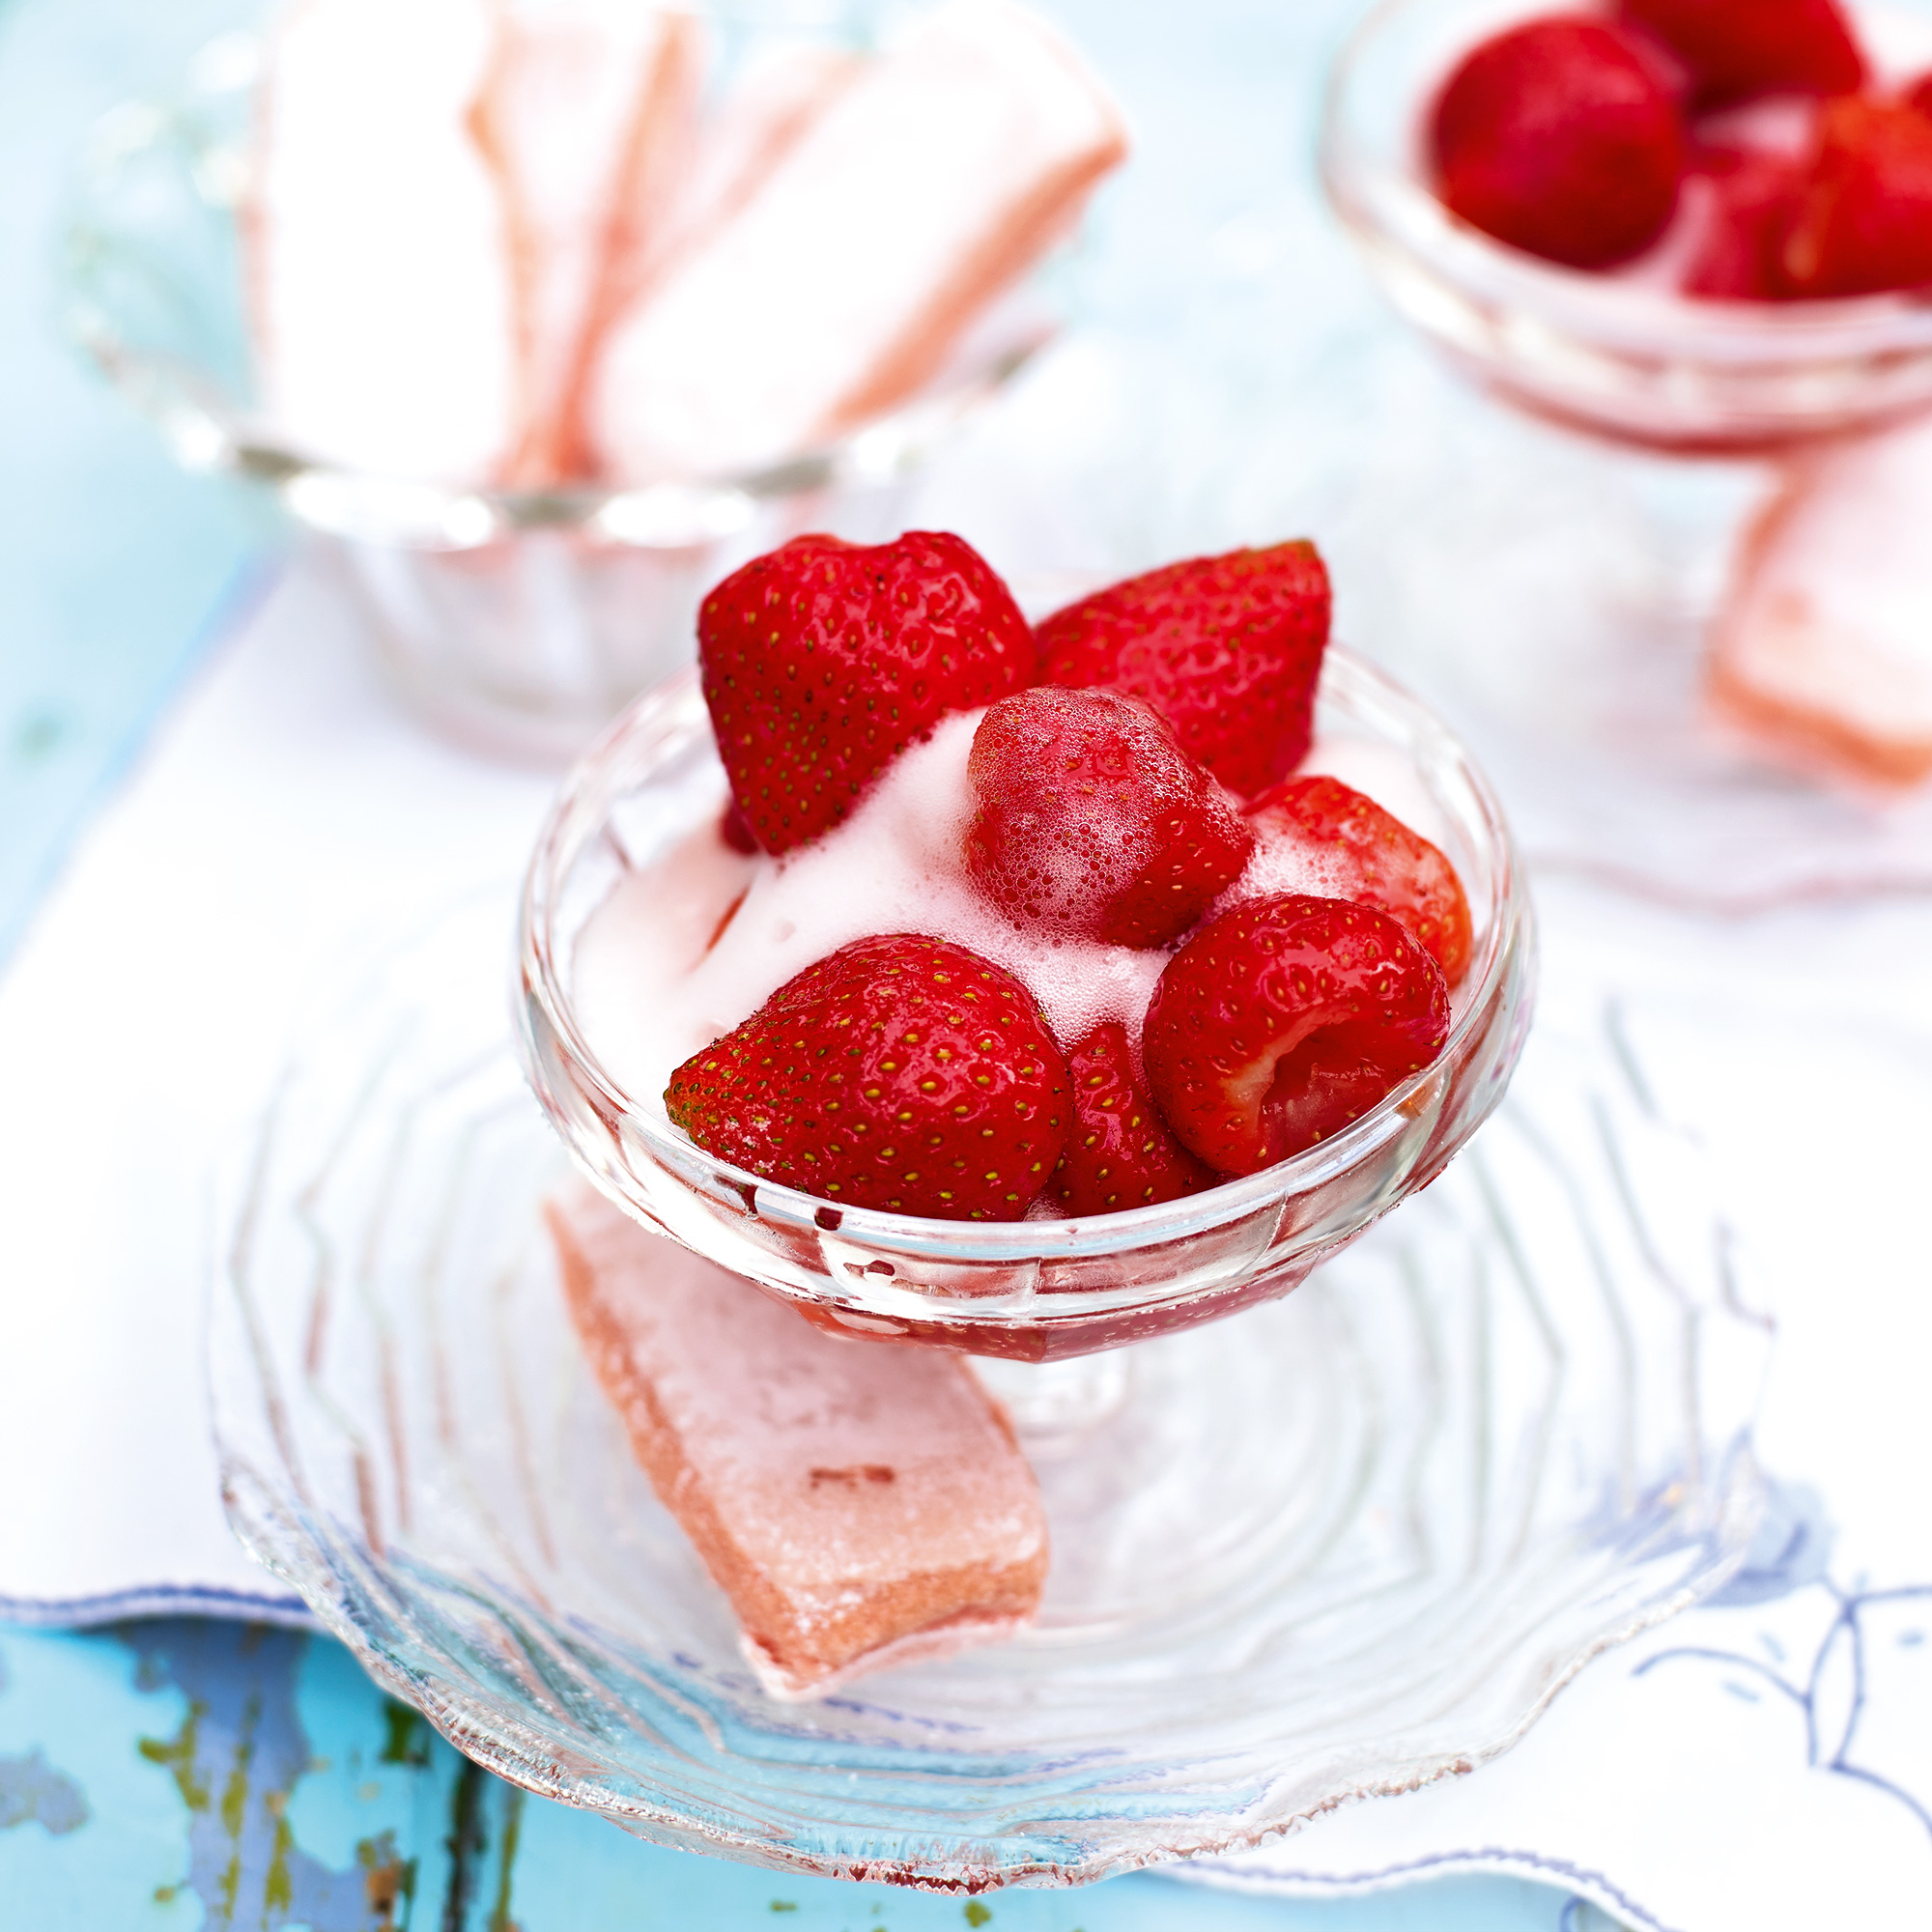 Low Fat Strawberry Dessert 84